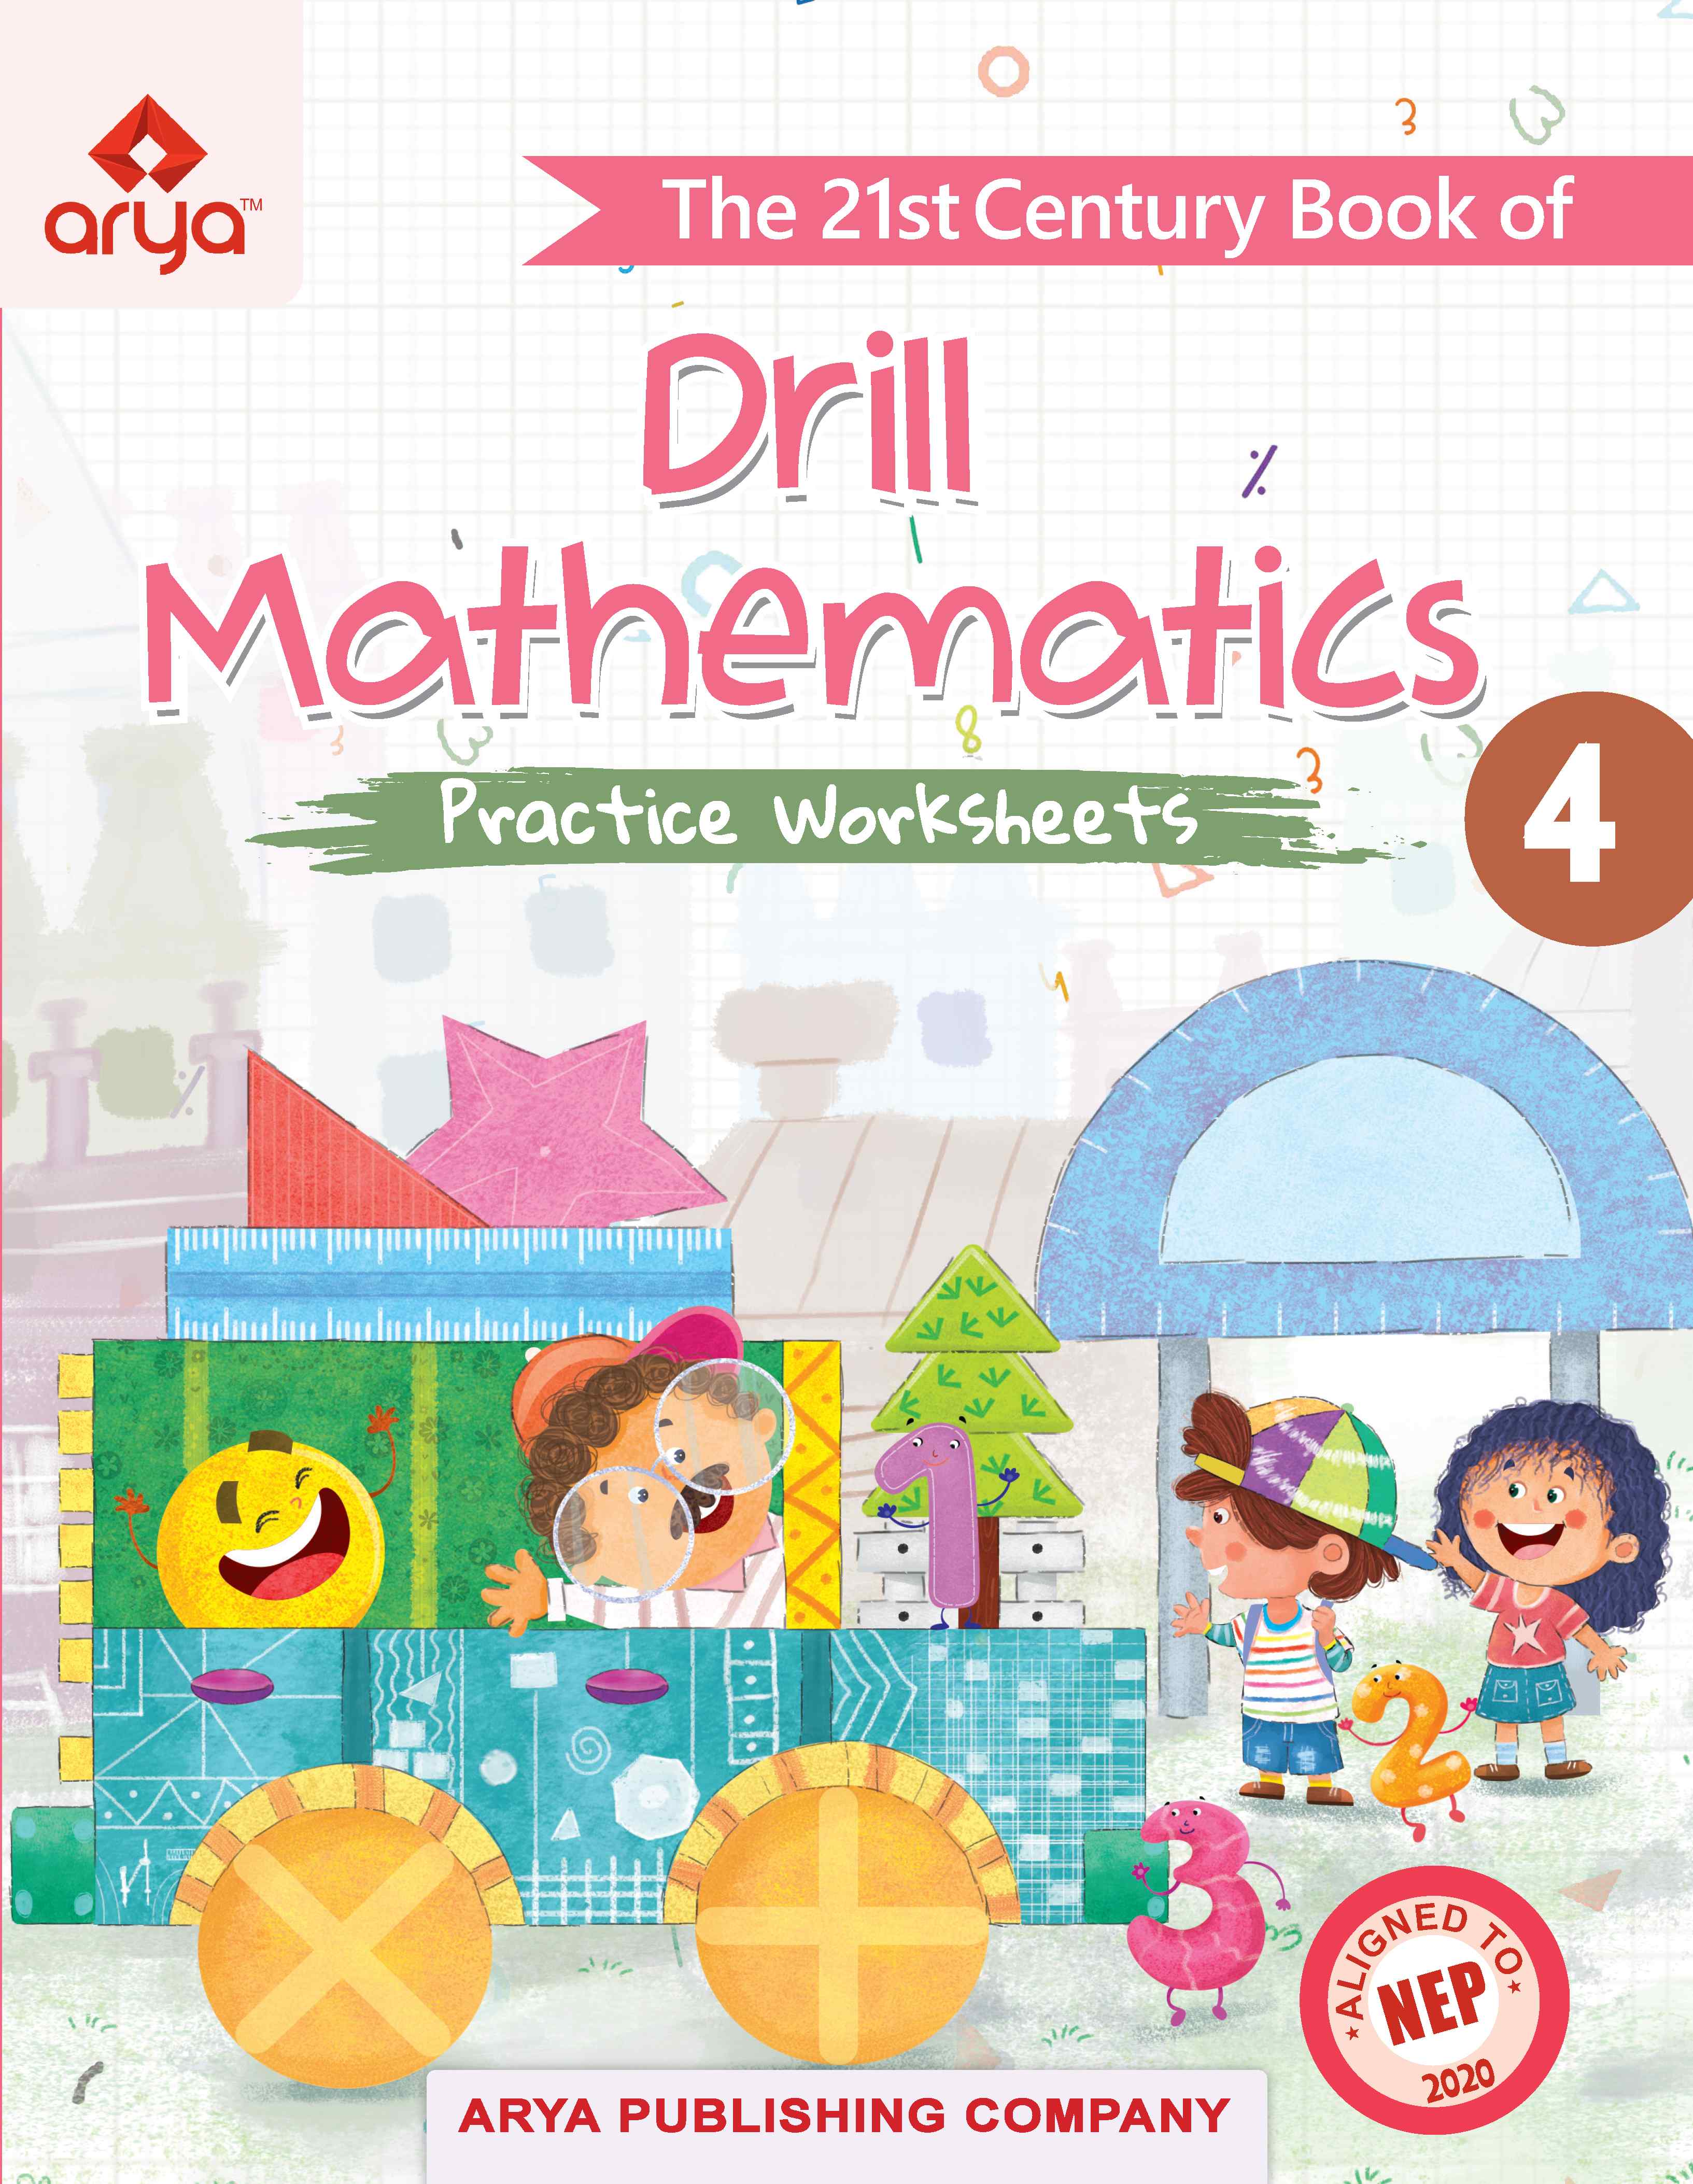 The 21st Century Book of Drill Mathematics4